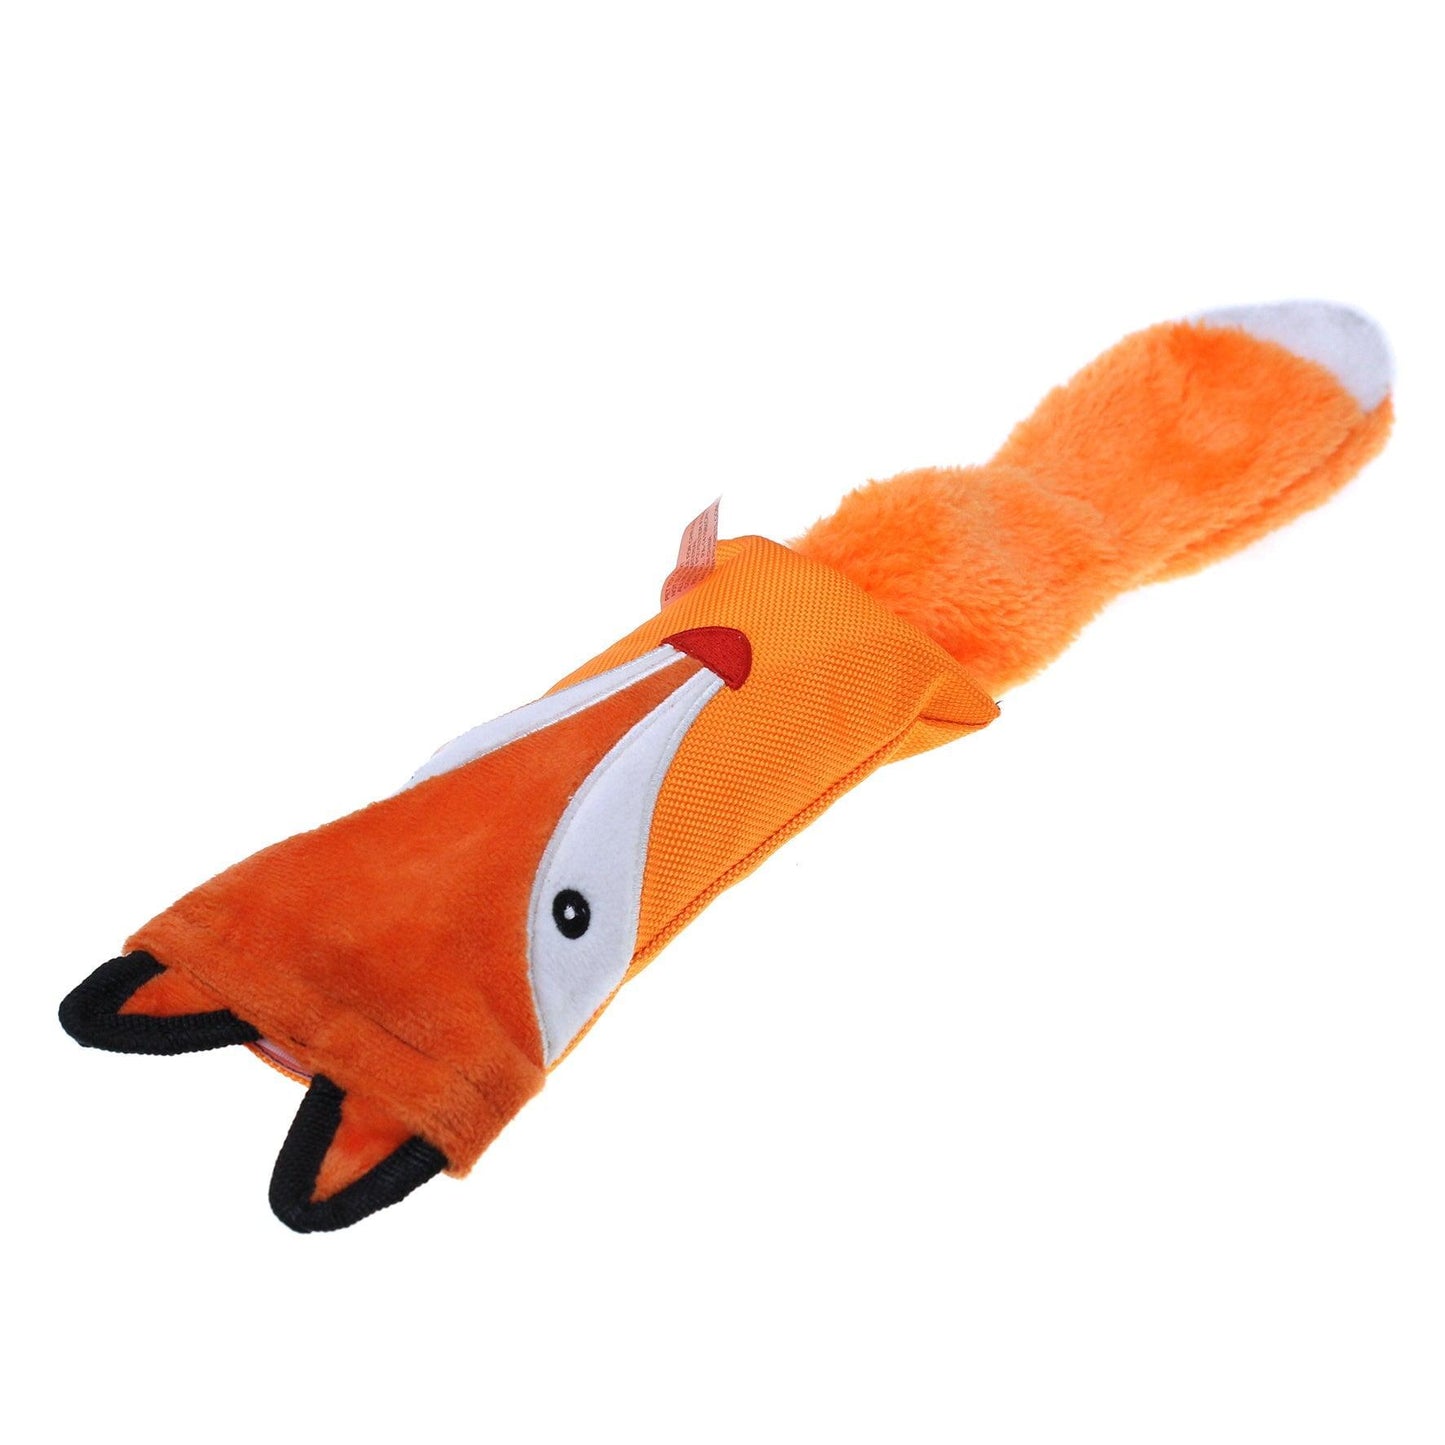 Squeaky Plush Dog Toy Wild Forest Fox